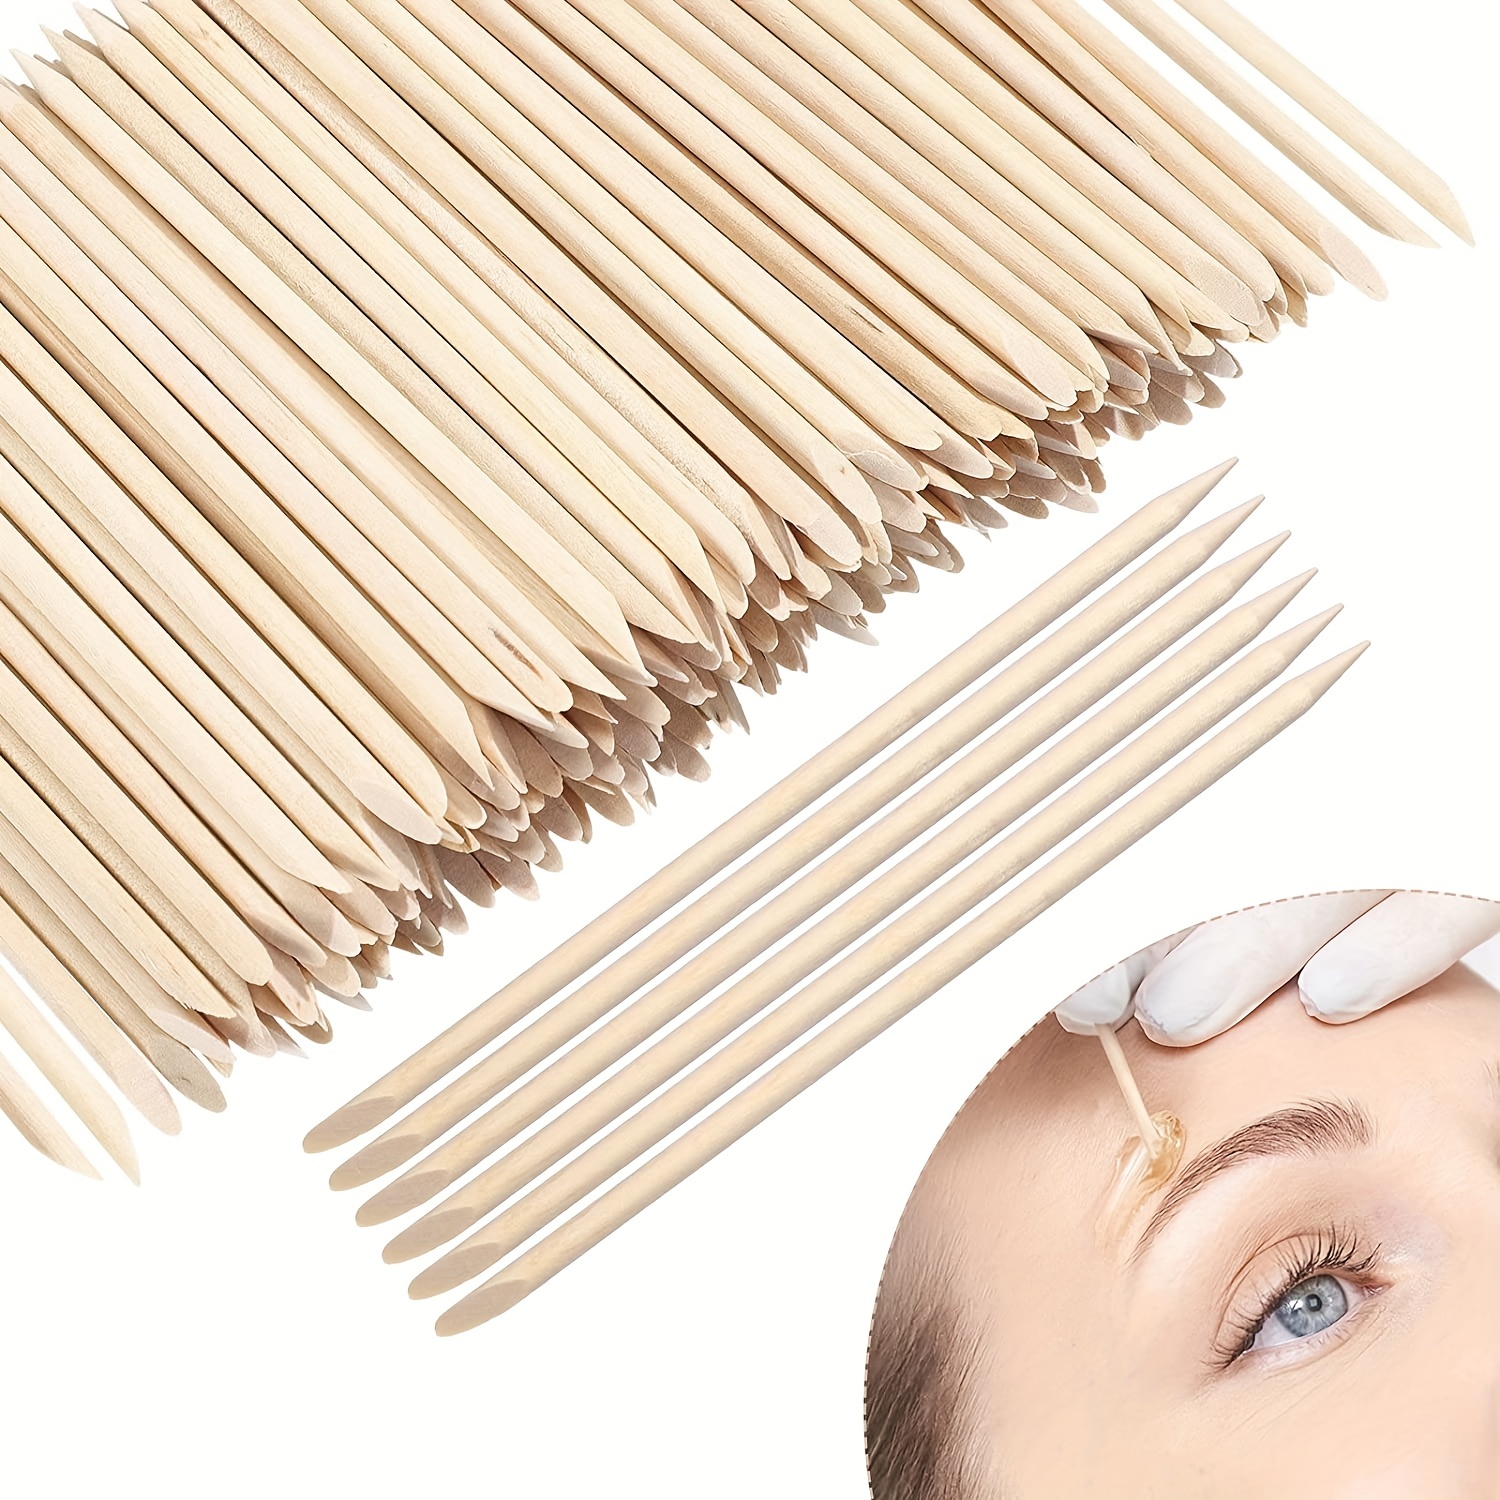 Wooden Wax Sticks 400pcs Wax Spatulas Applicator for Body Eyebrow